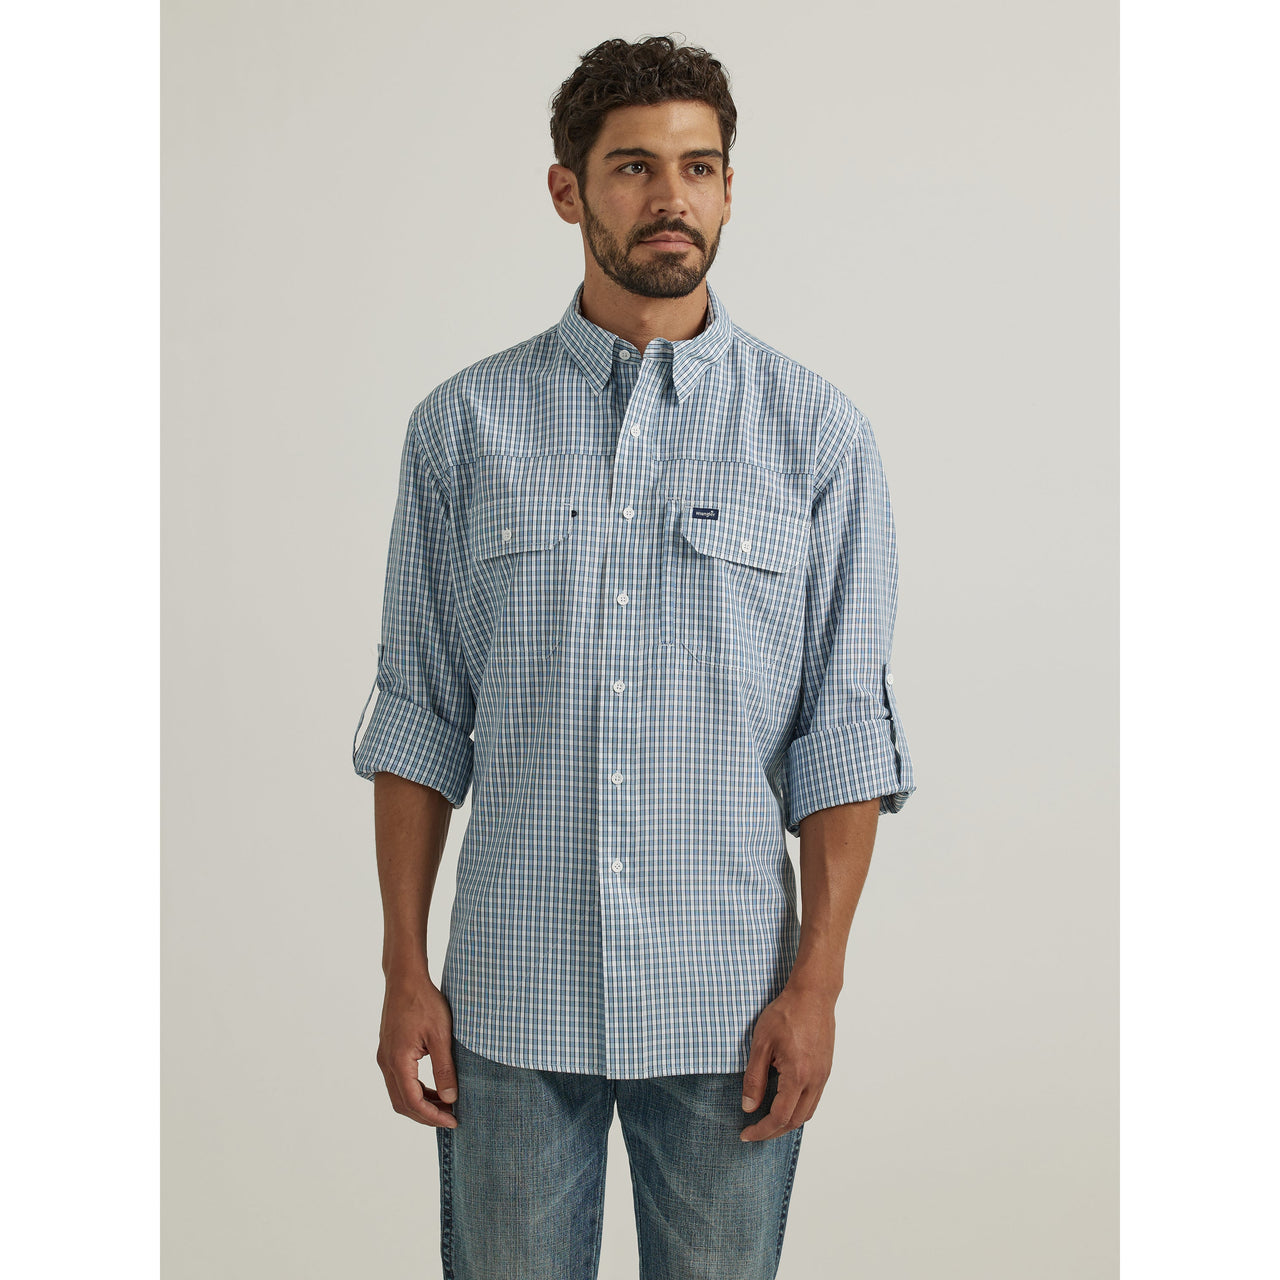 Wrangler Men's Western Plaid Long Sleeve Shirt - Navy